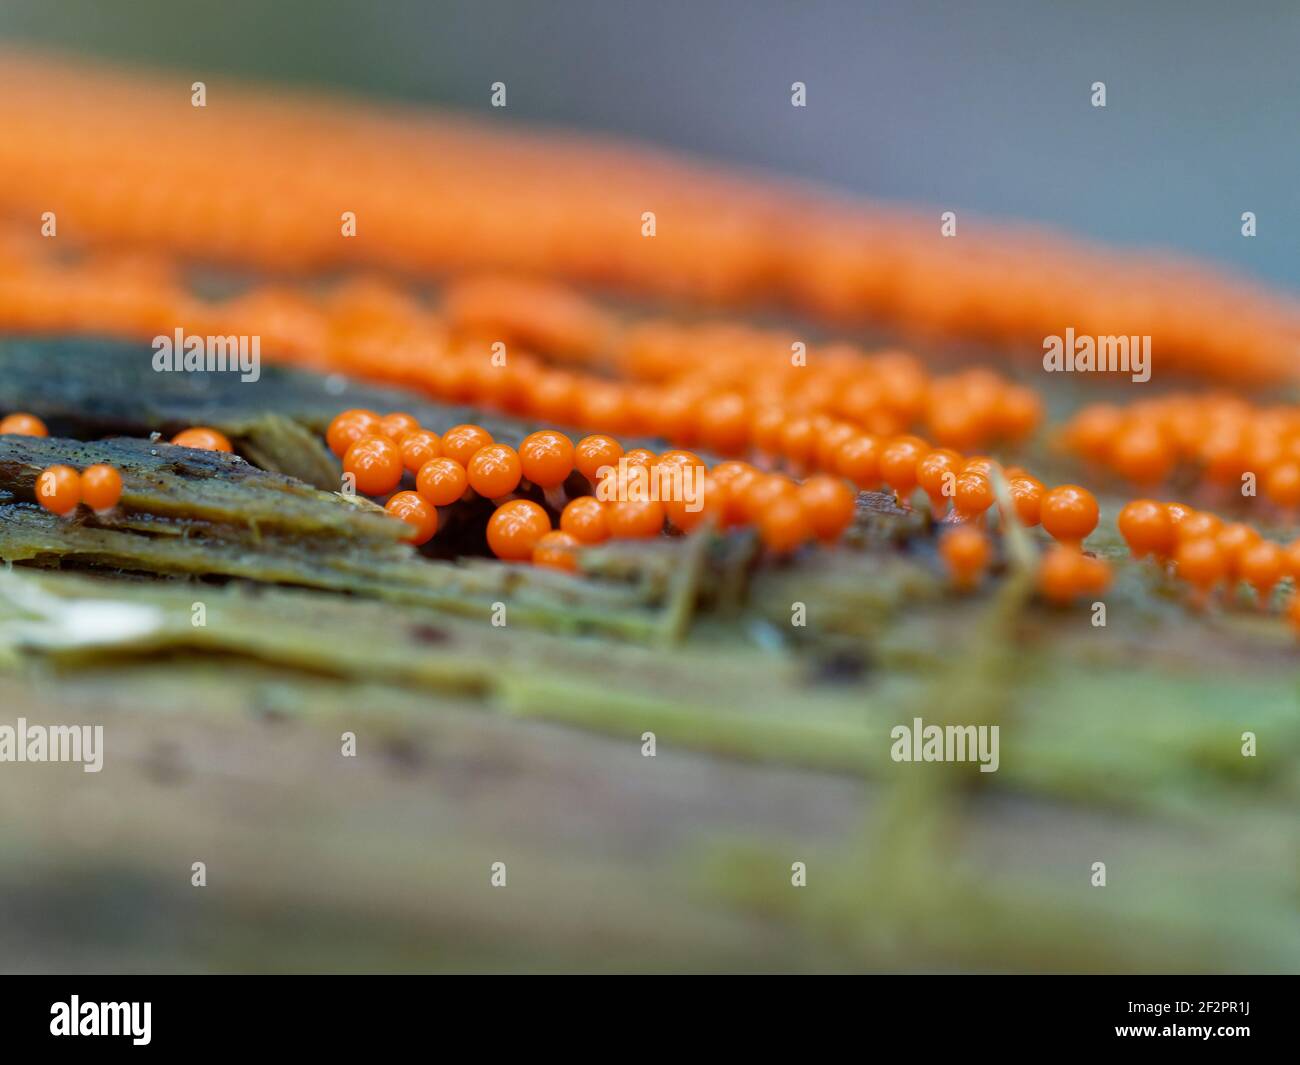 Orange slime mold in autumn Stock Photo